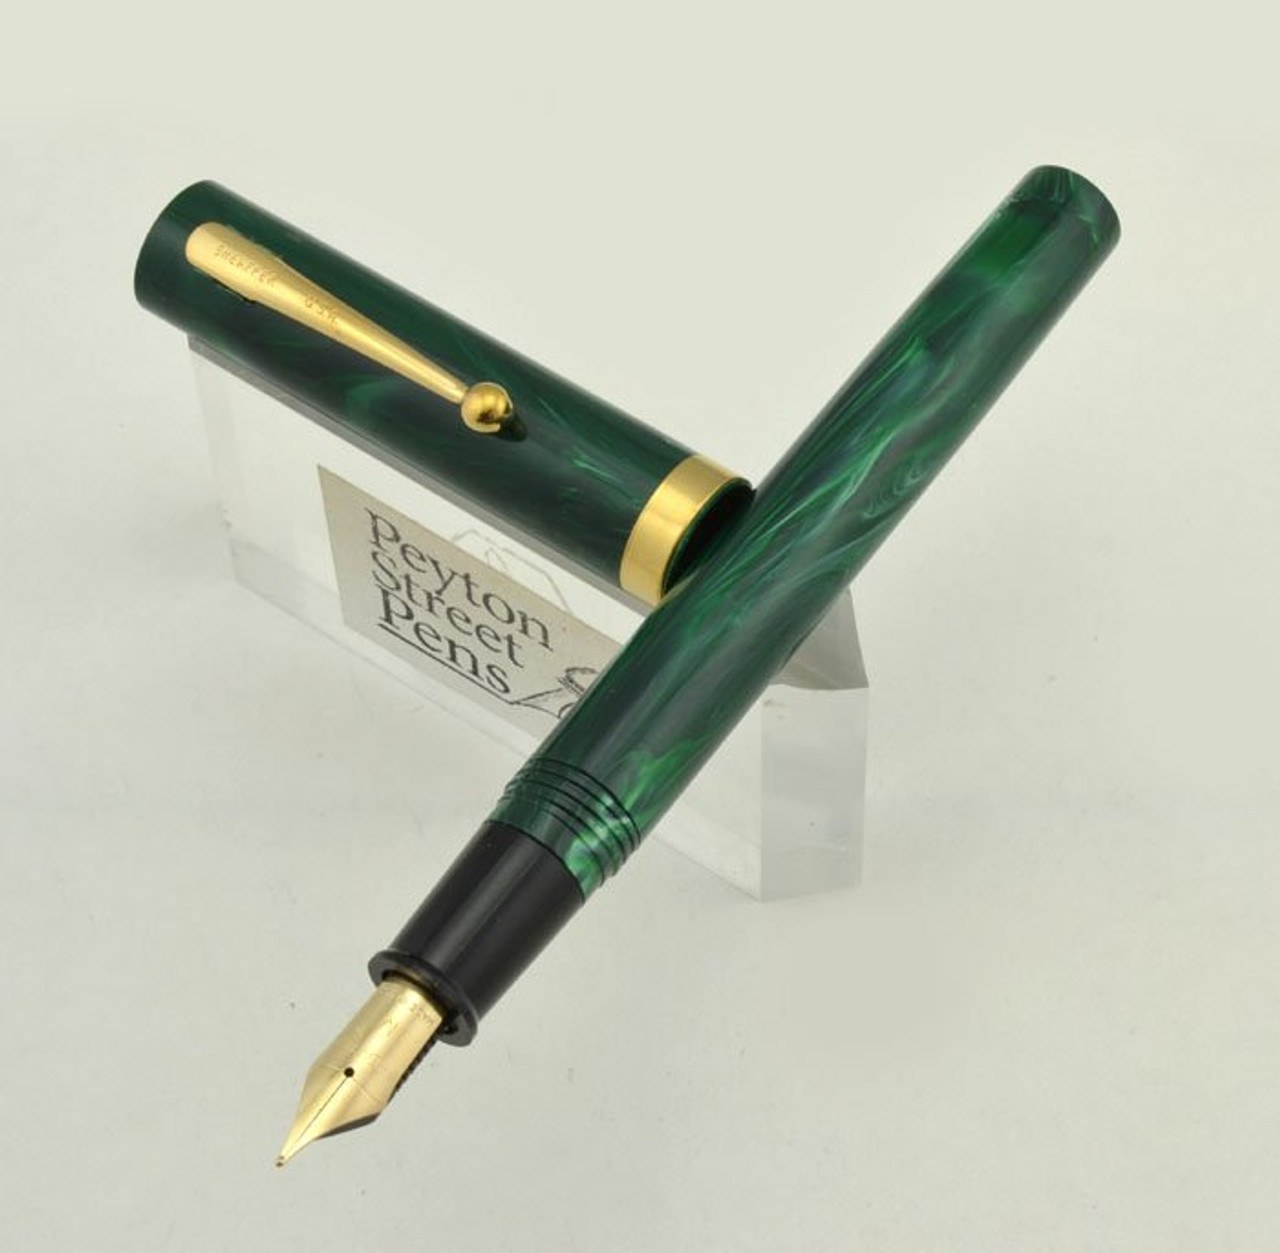 Sheaffer No Nonsense "Vintage" Fountain Pen - Green Marble, Gold Plated Trim & Medium Nib (Pre-Owned)